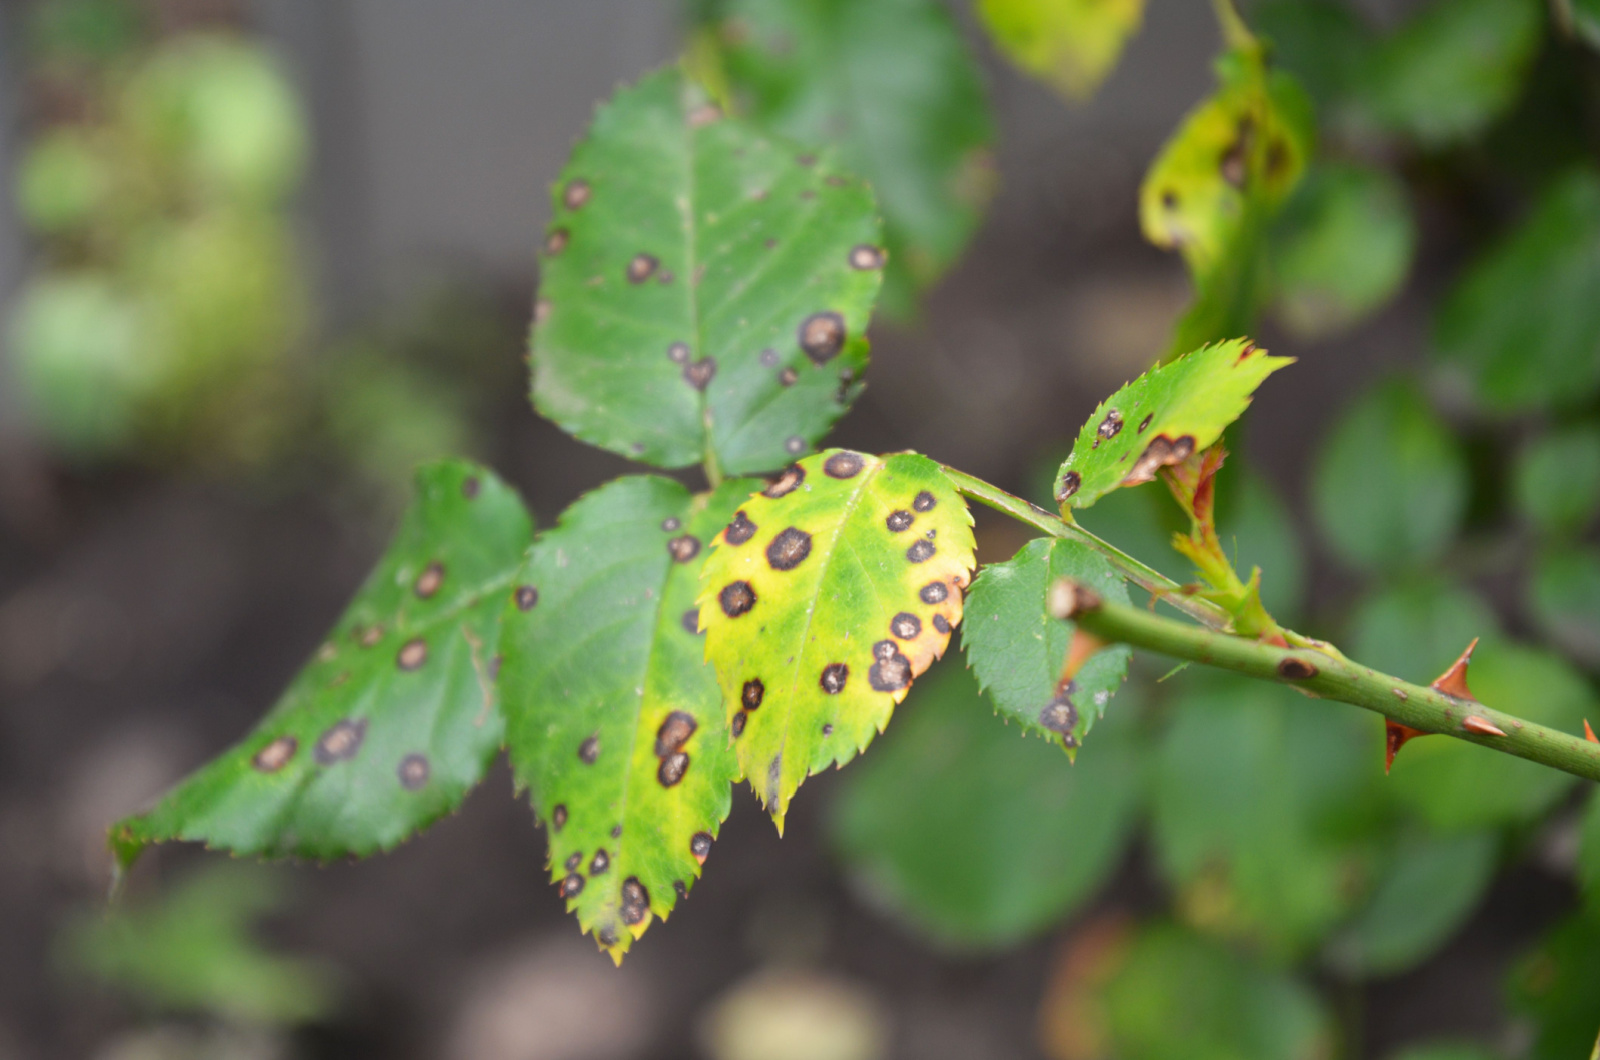 black spot disease on rose leaves